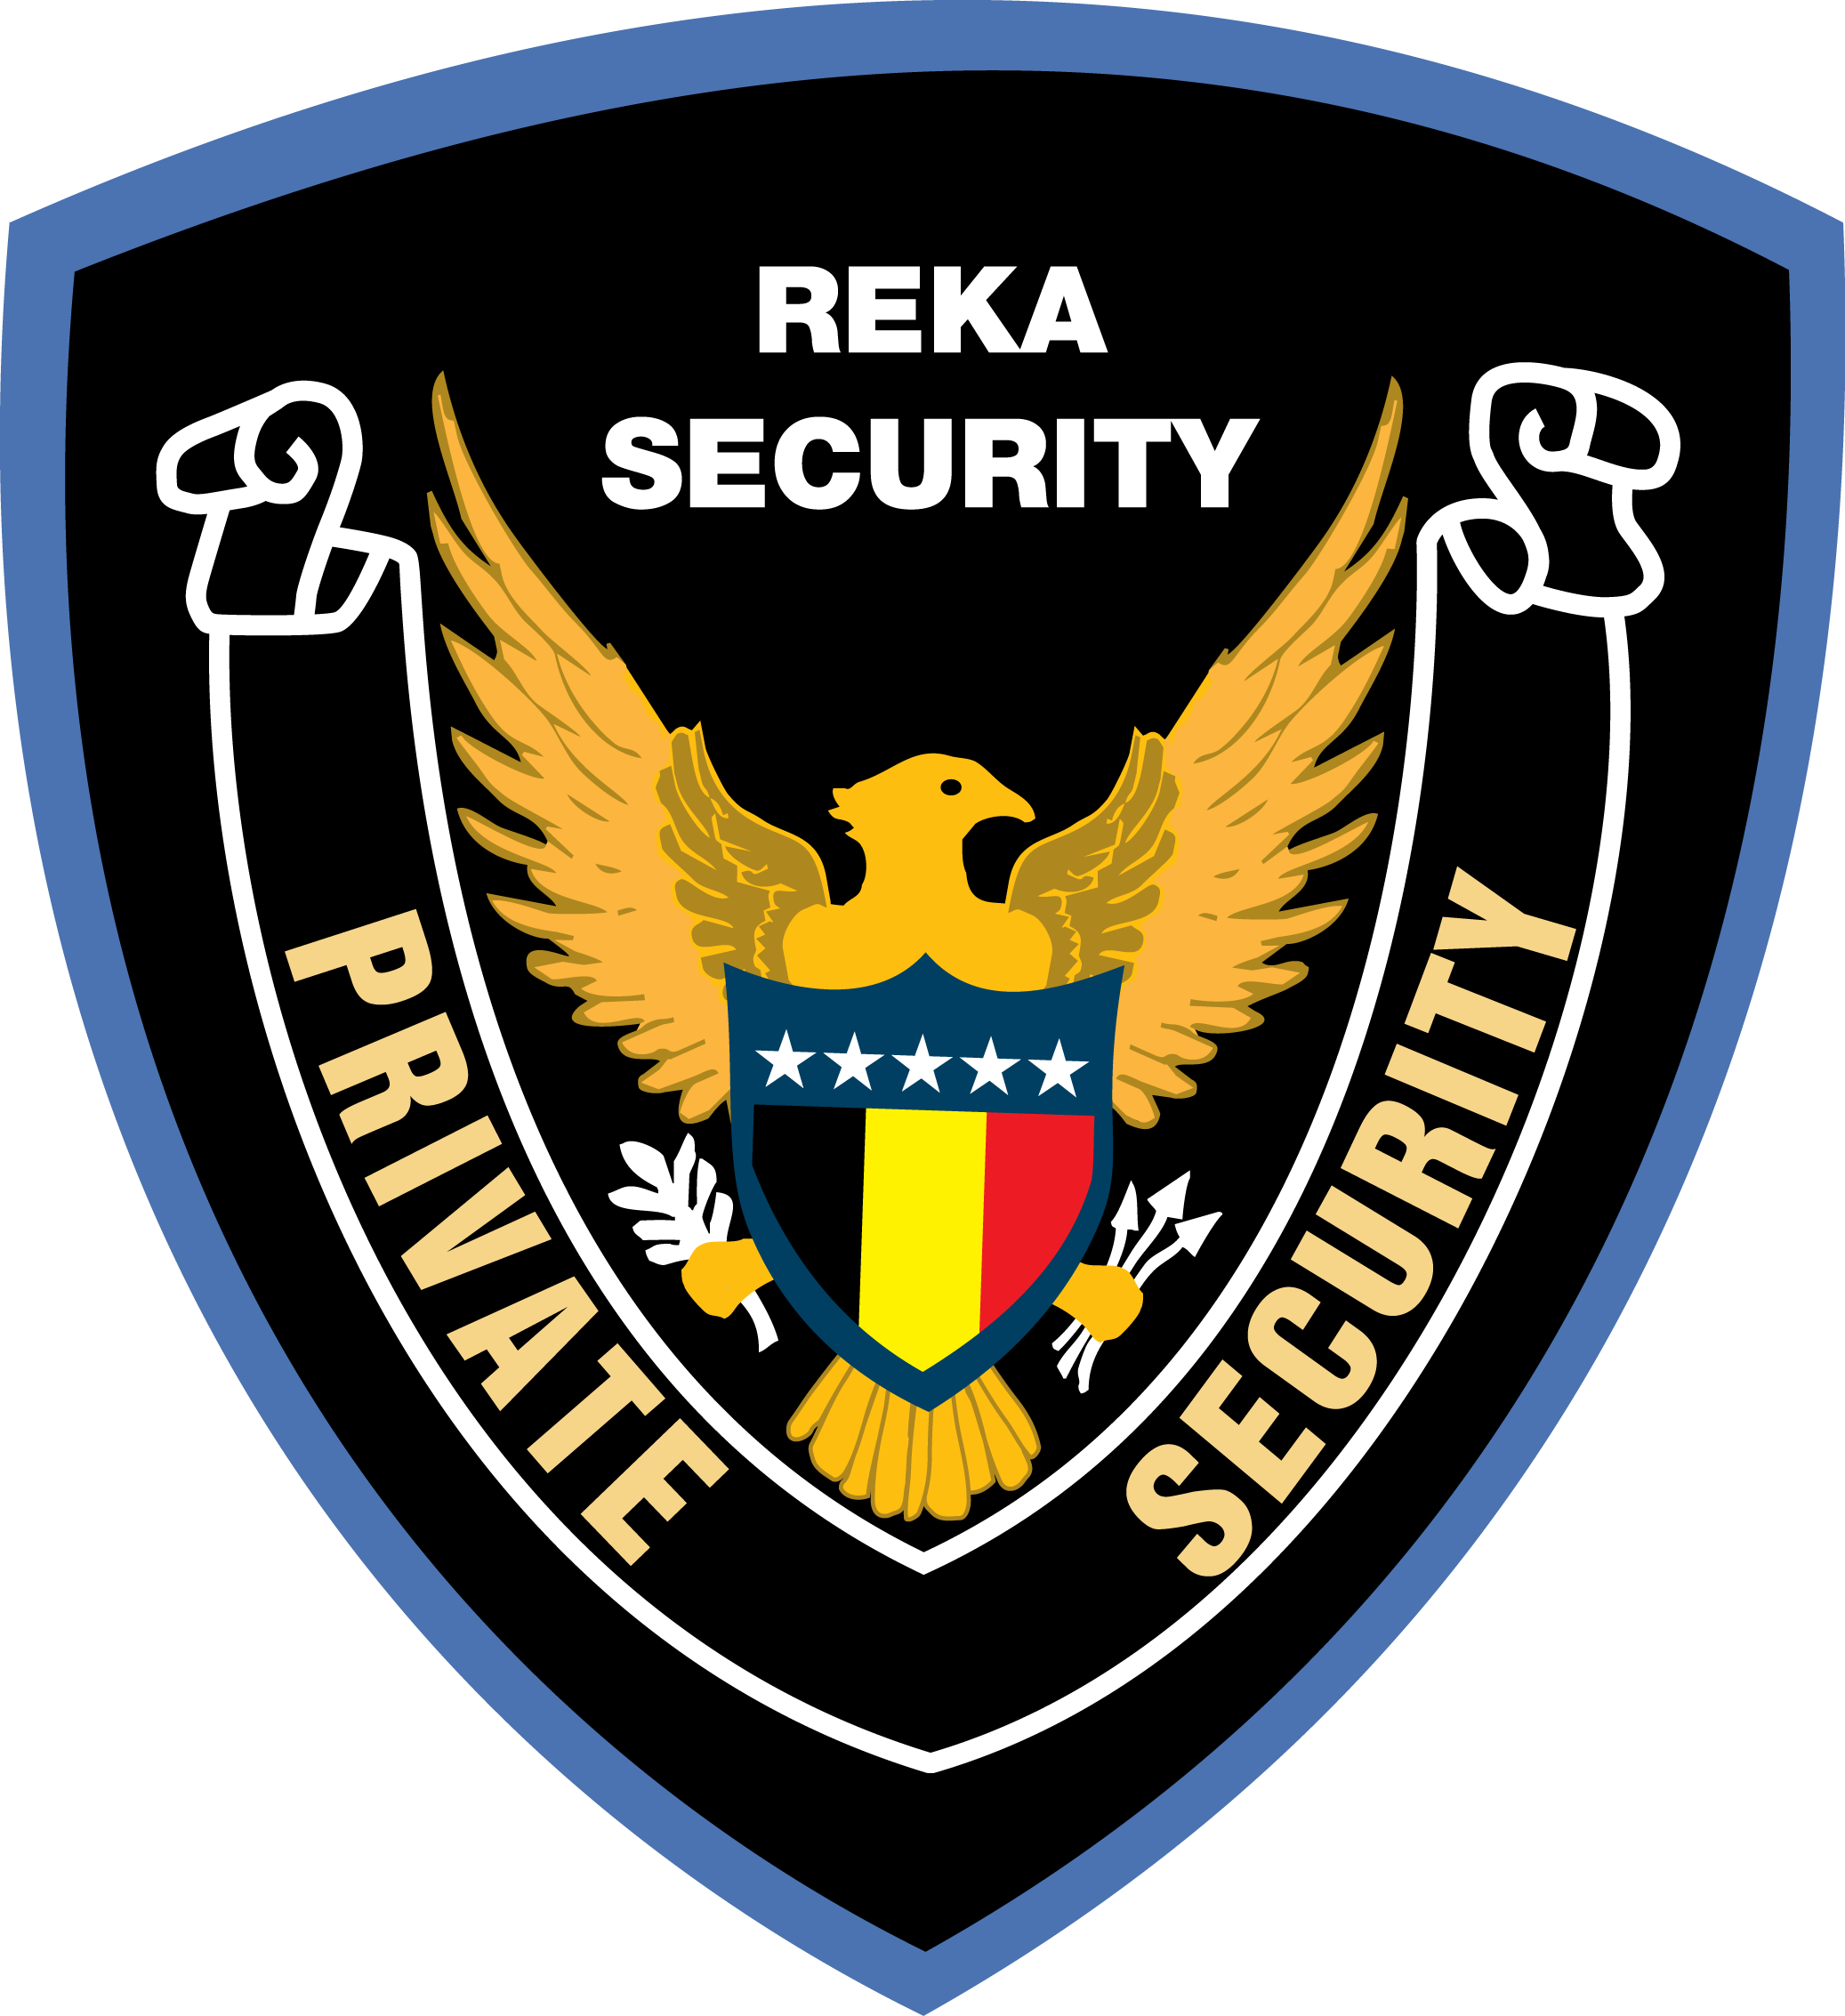 REKA SECURITY